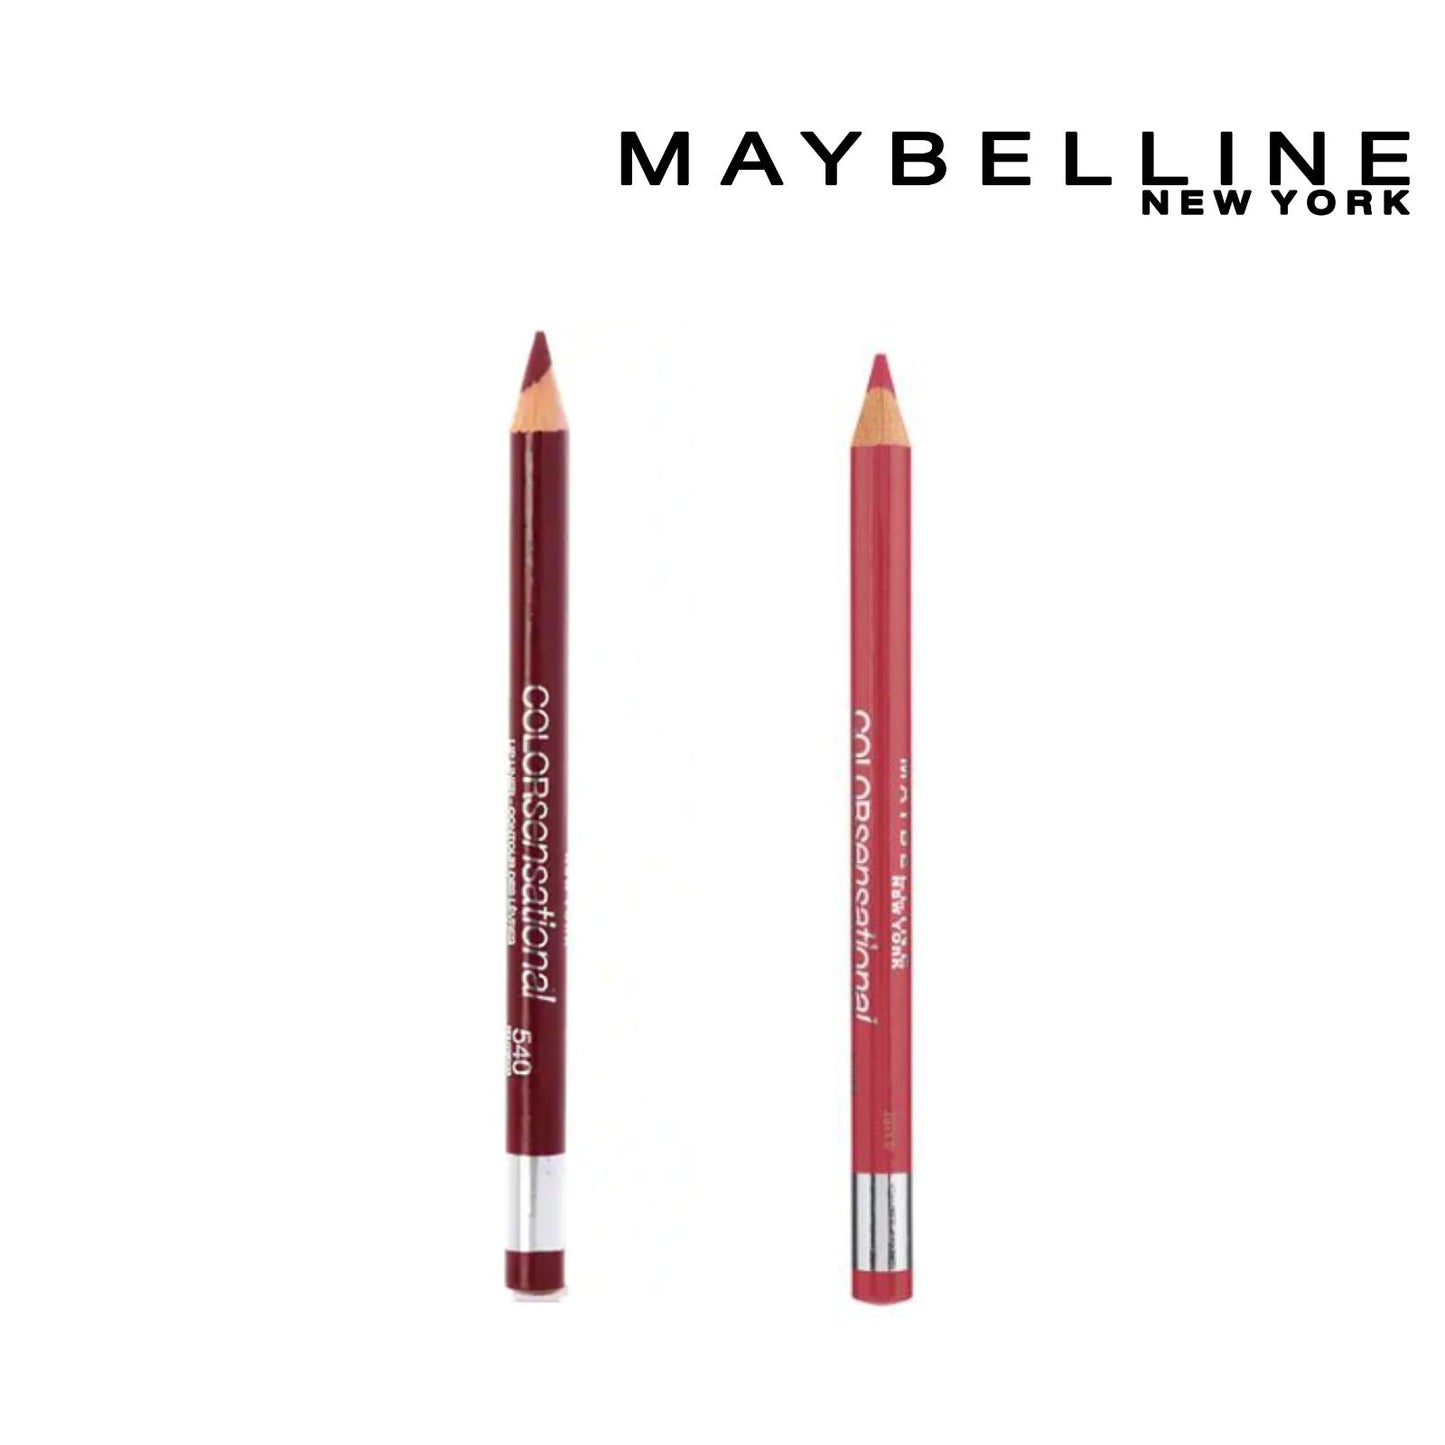 Anytime Lip Your Enhance - Sensational Liner Define Lips and Color – Maybelline Makeup